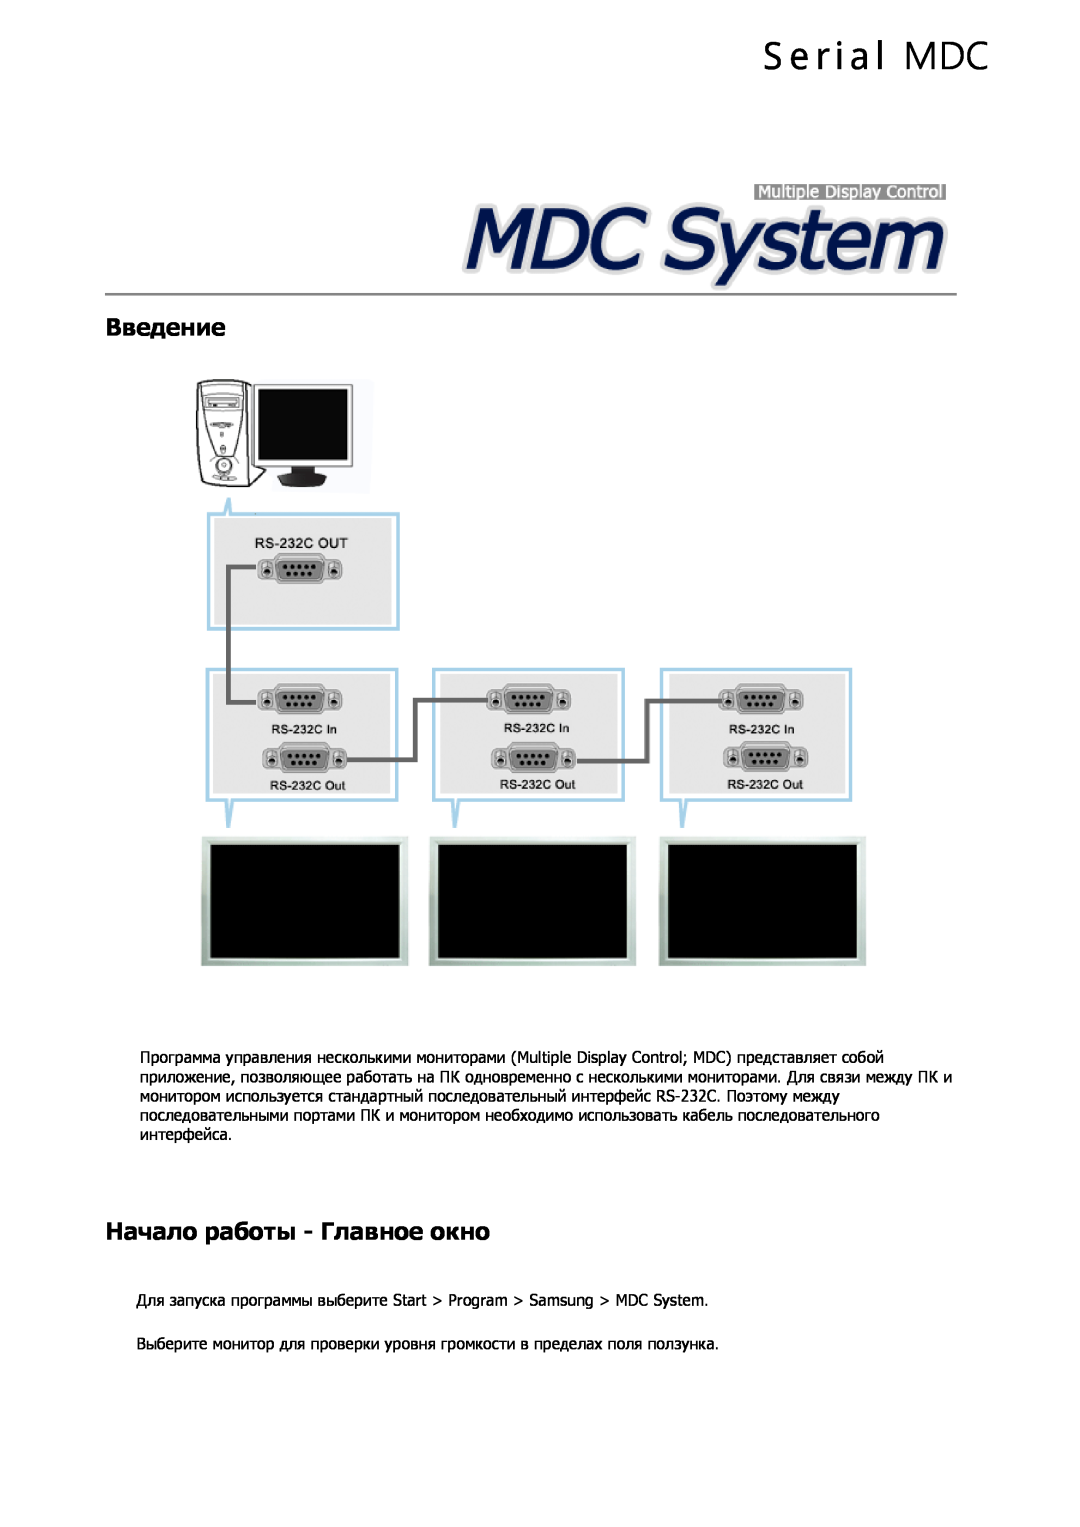 Samsung LH32CRSMBD/EN, LH32CRTMBC/EN manual S e r i a l MDC, Введение, Начало работы - Главное окно 